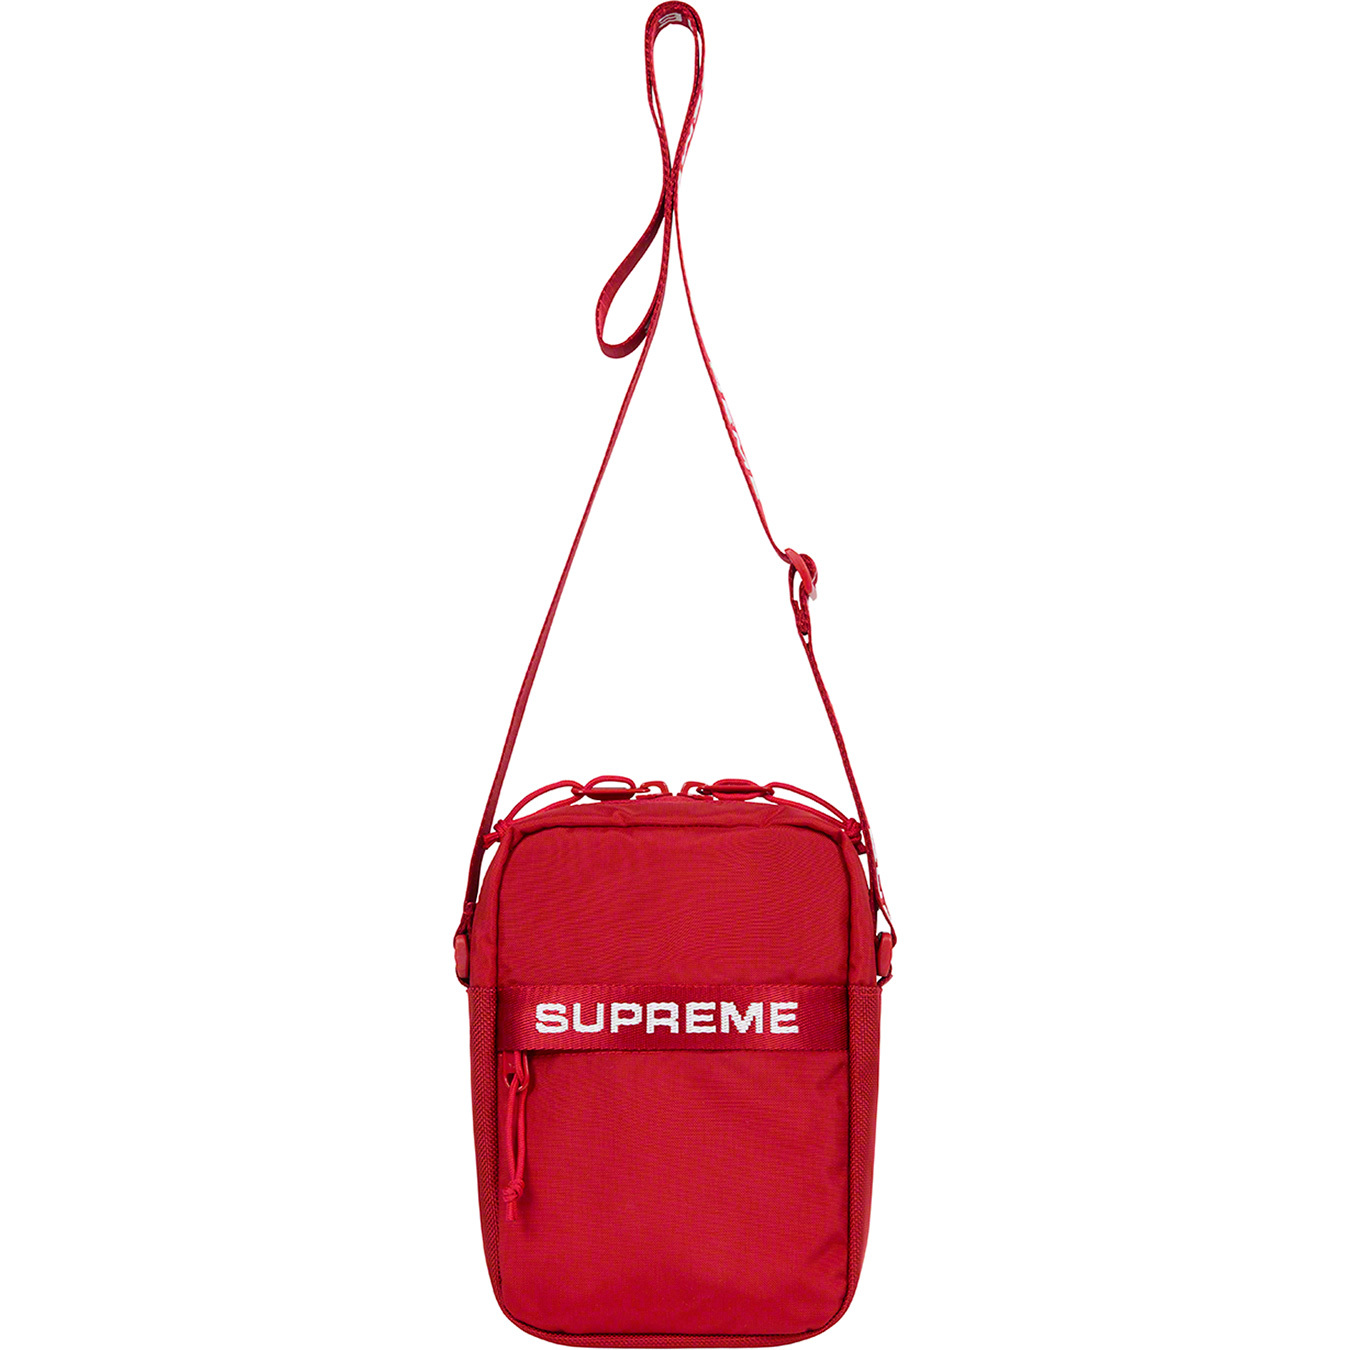 Legit supreme slingbag